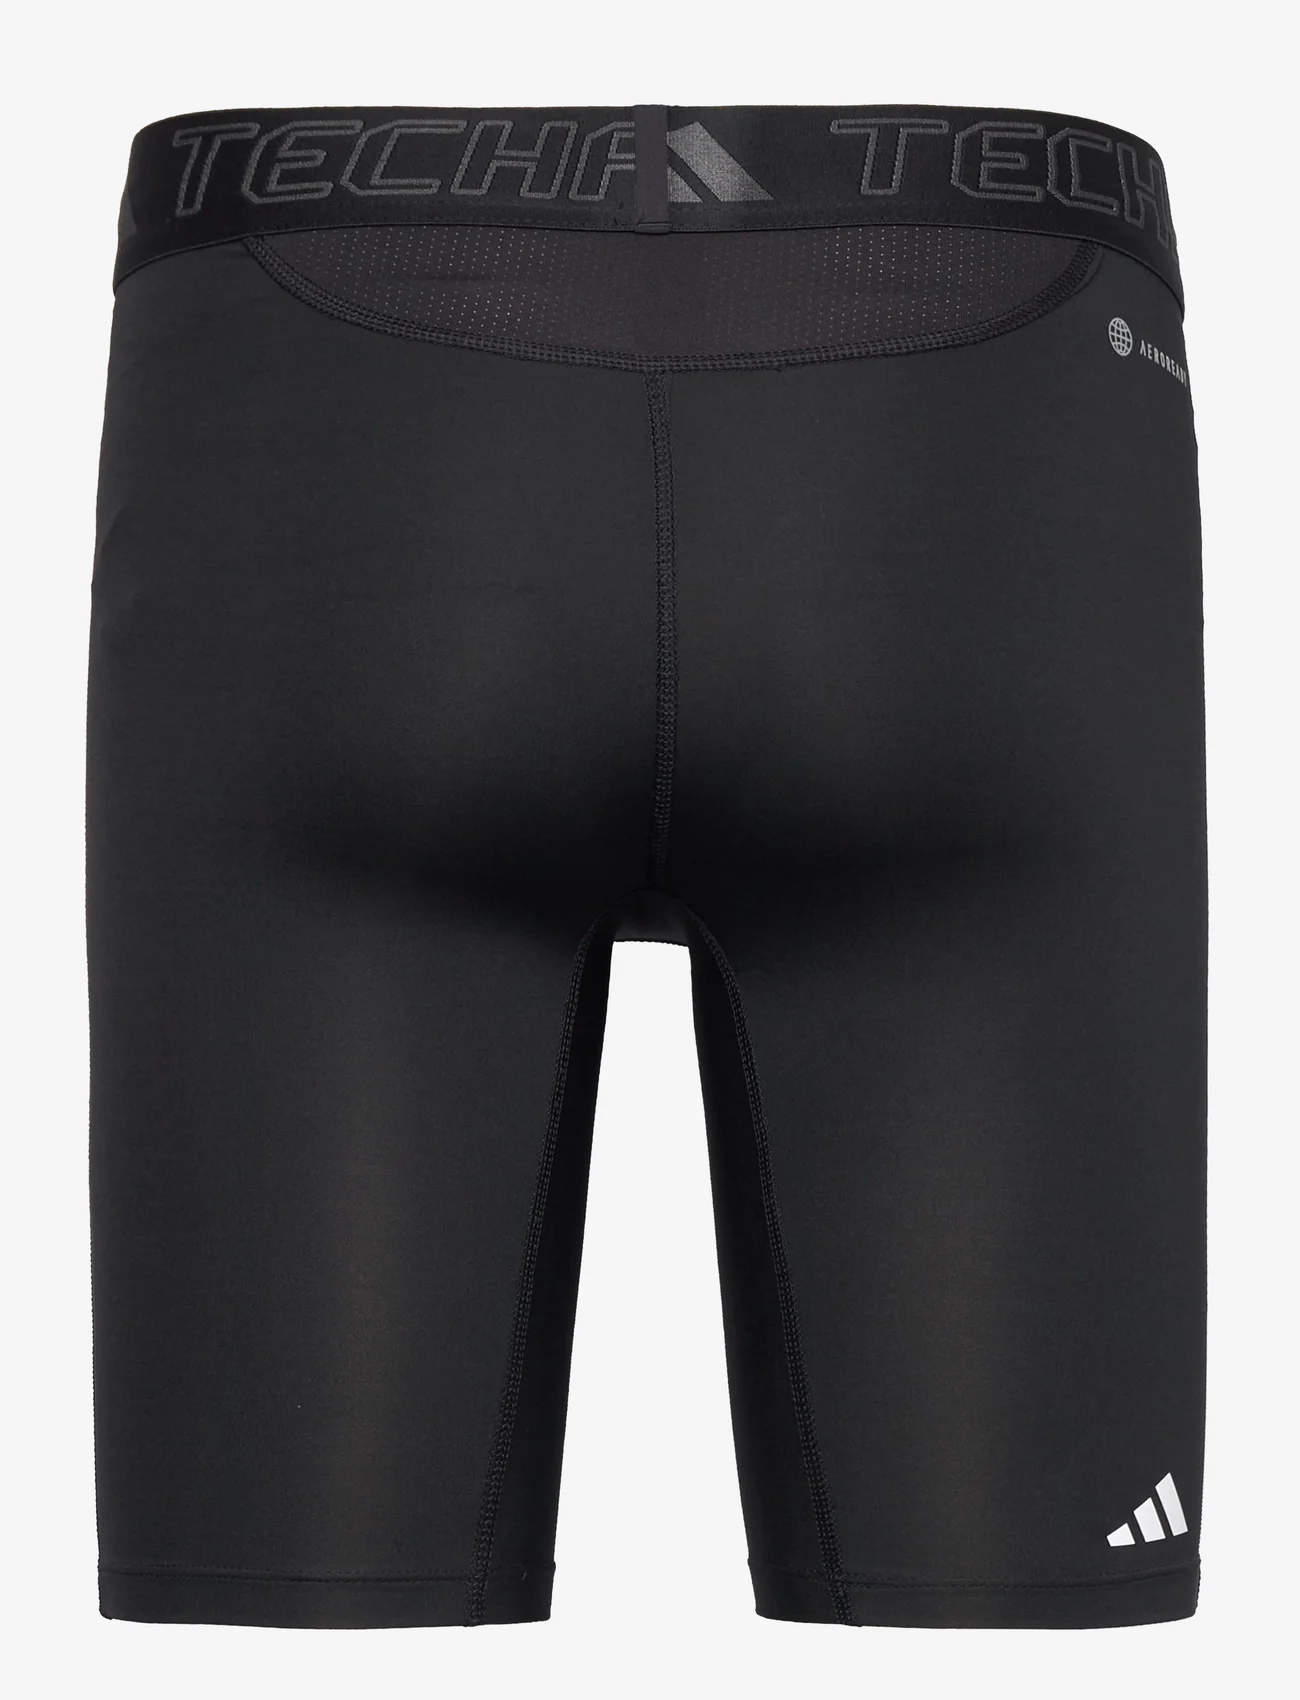 adidas Performance - TF S LGG - training shorts - black - 1